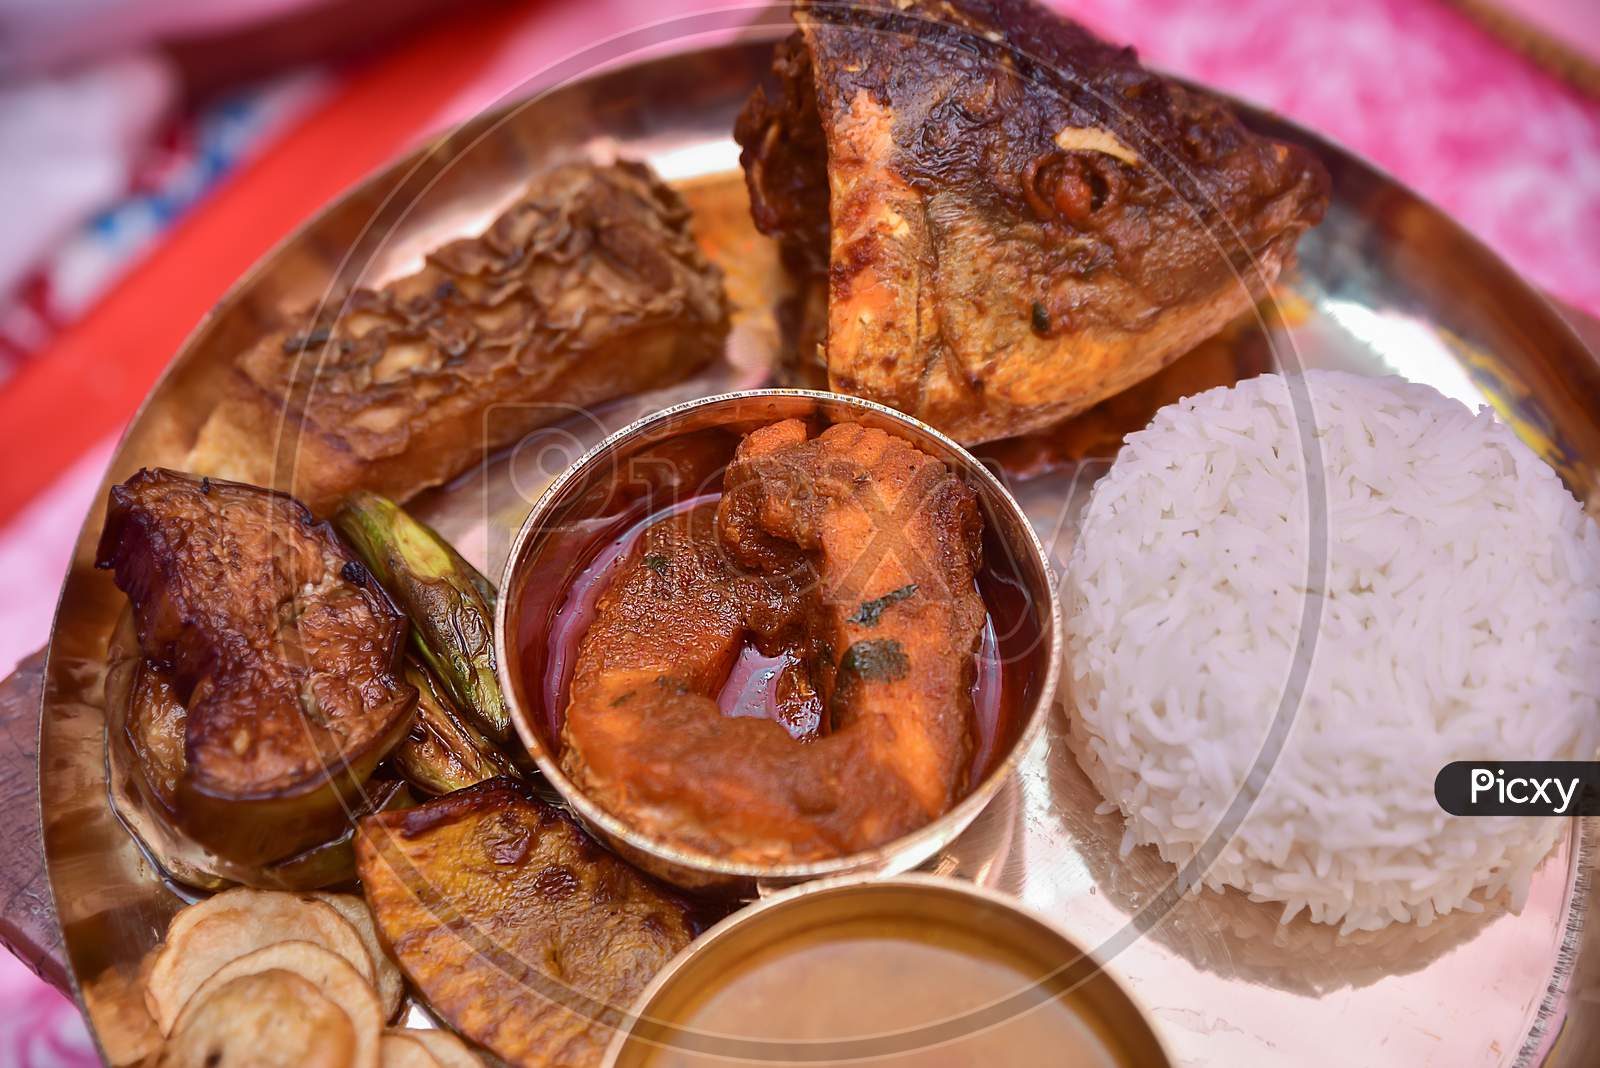 Bengali Thali served hot